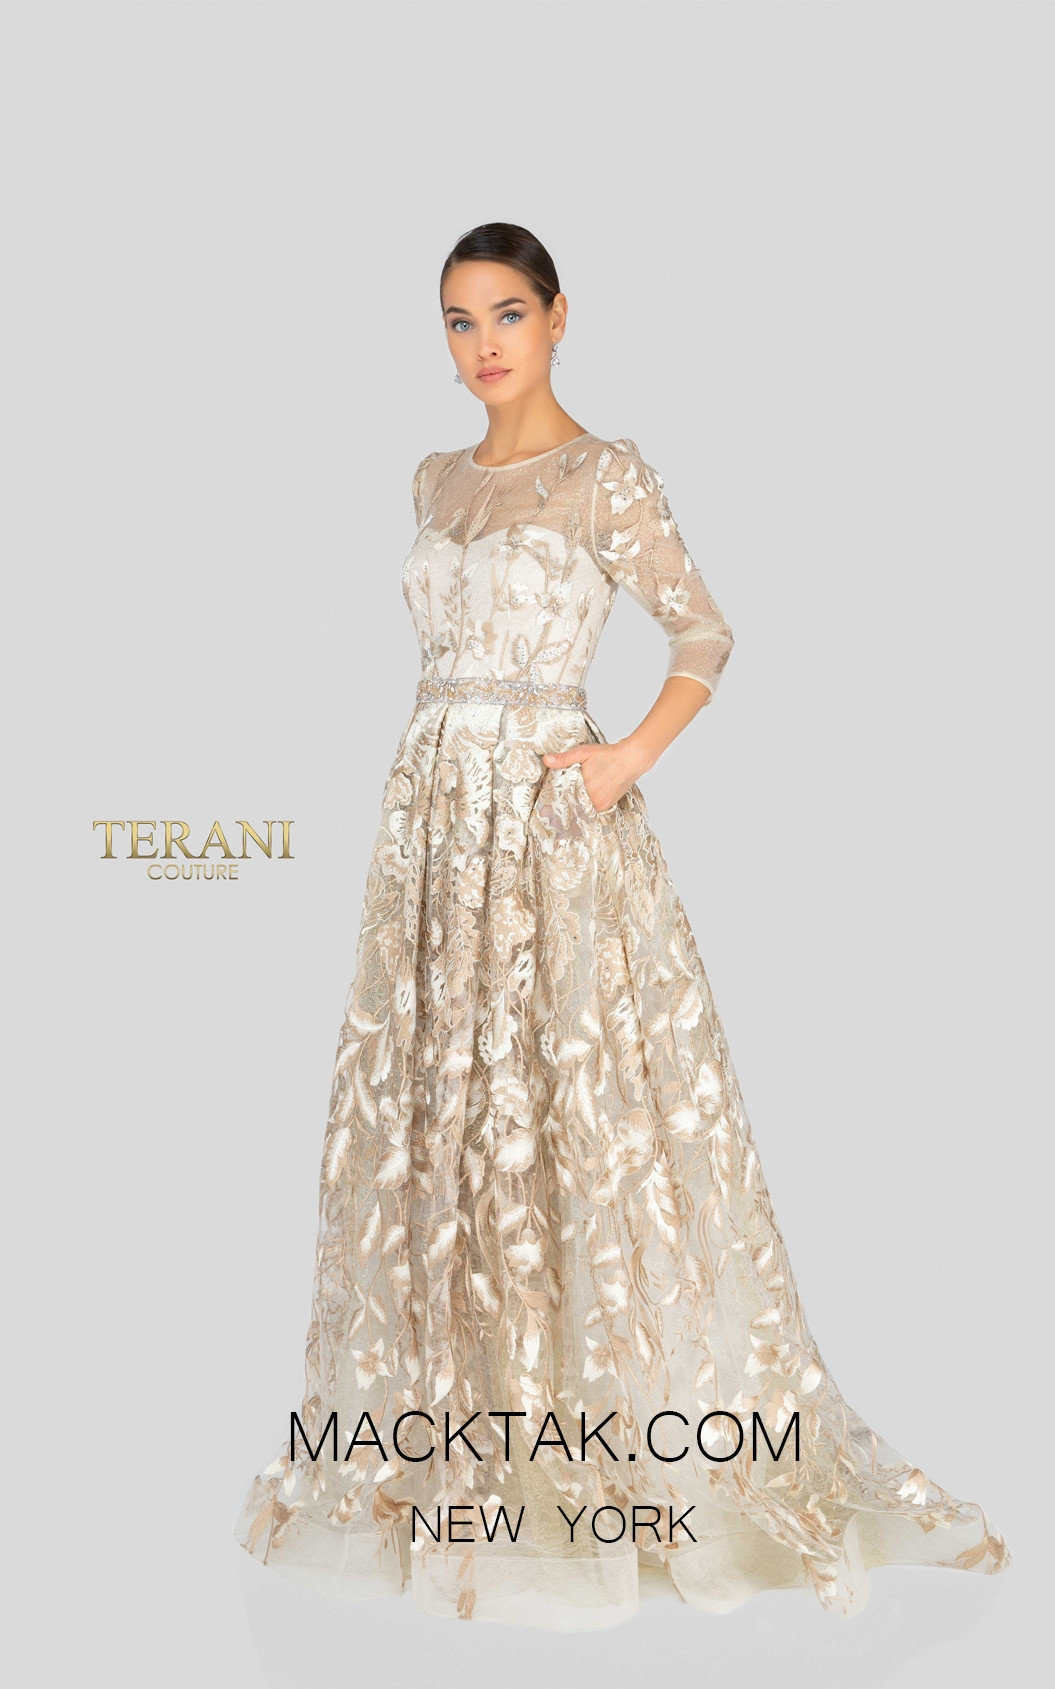 terani feather dress